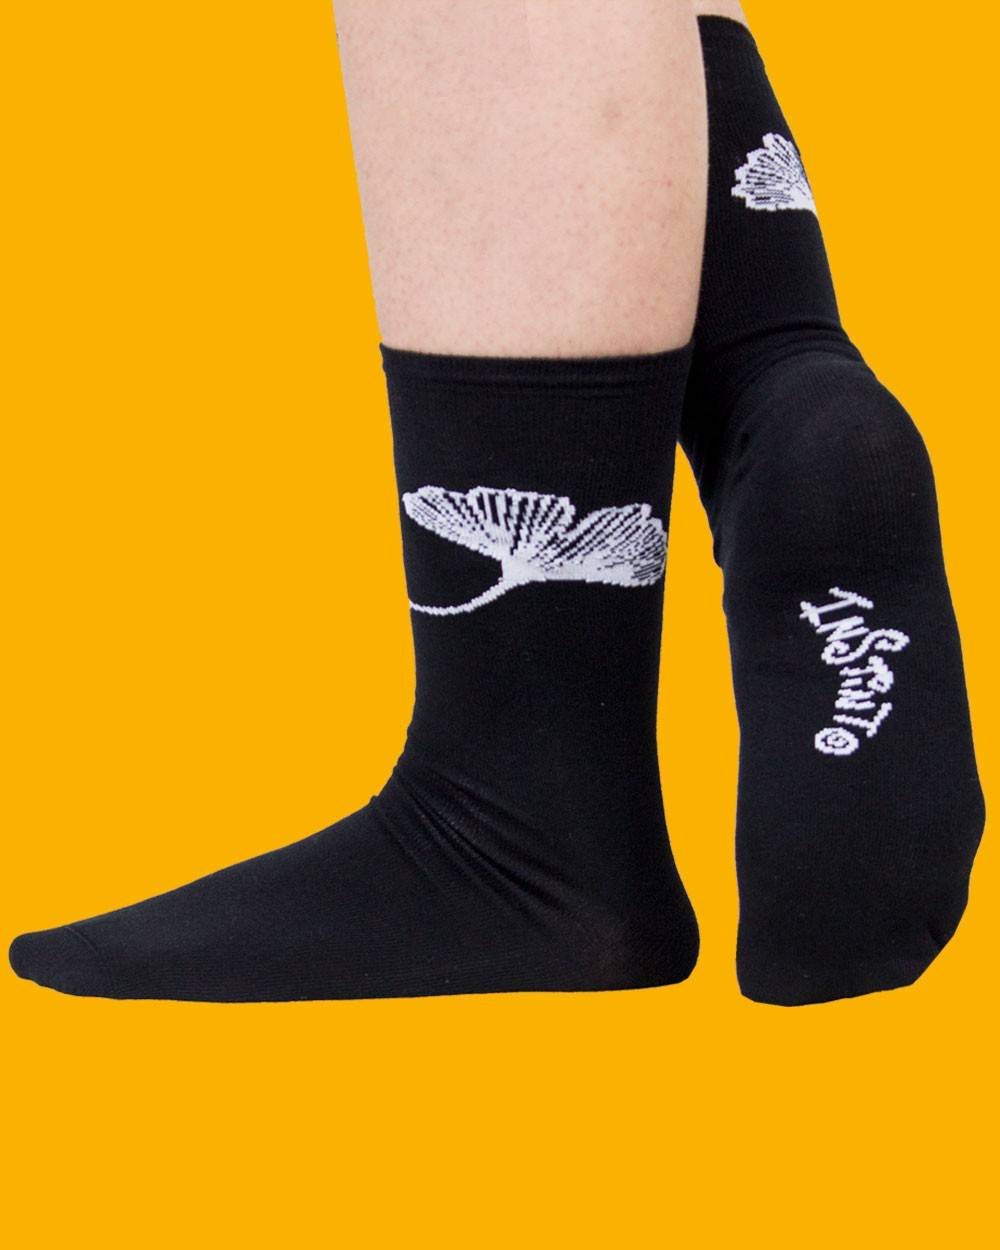 Ginkgo white socks